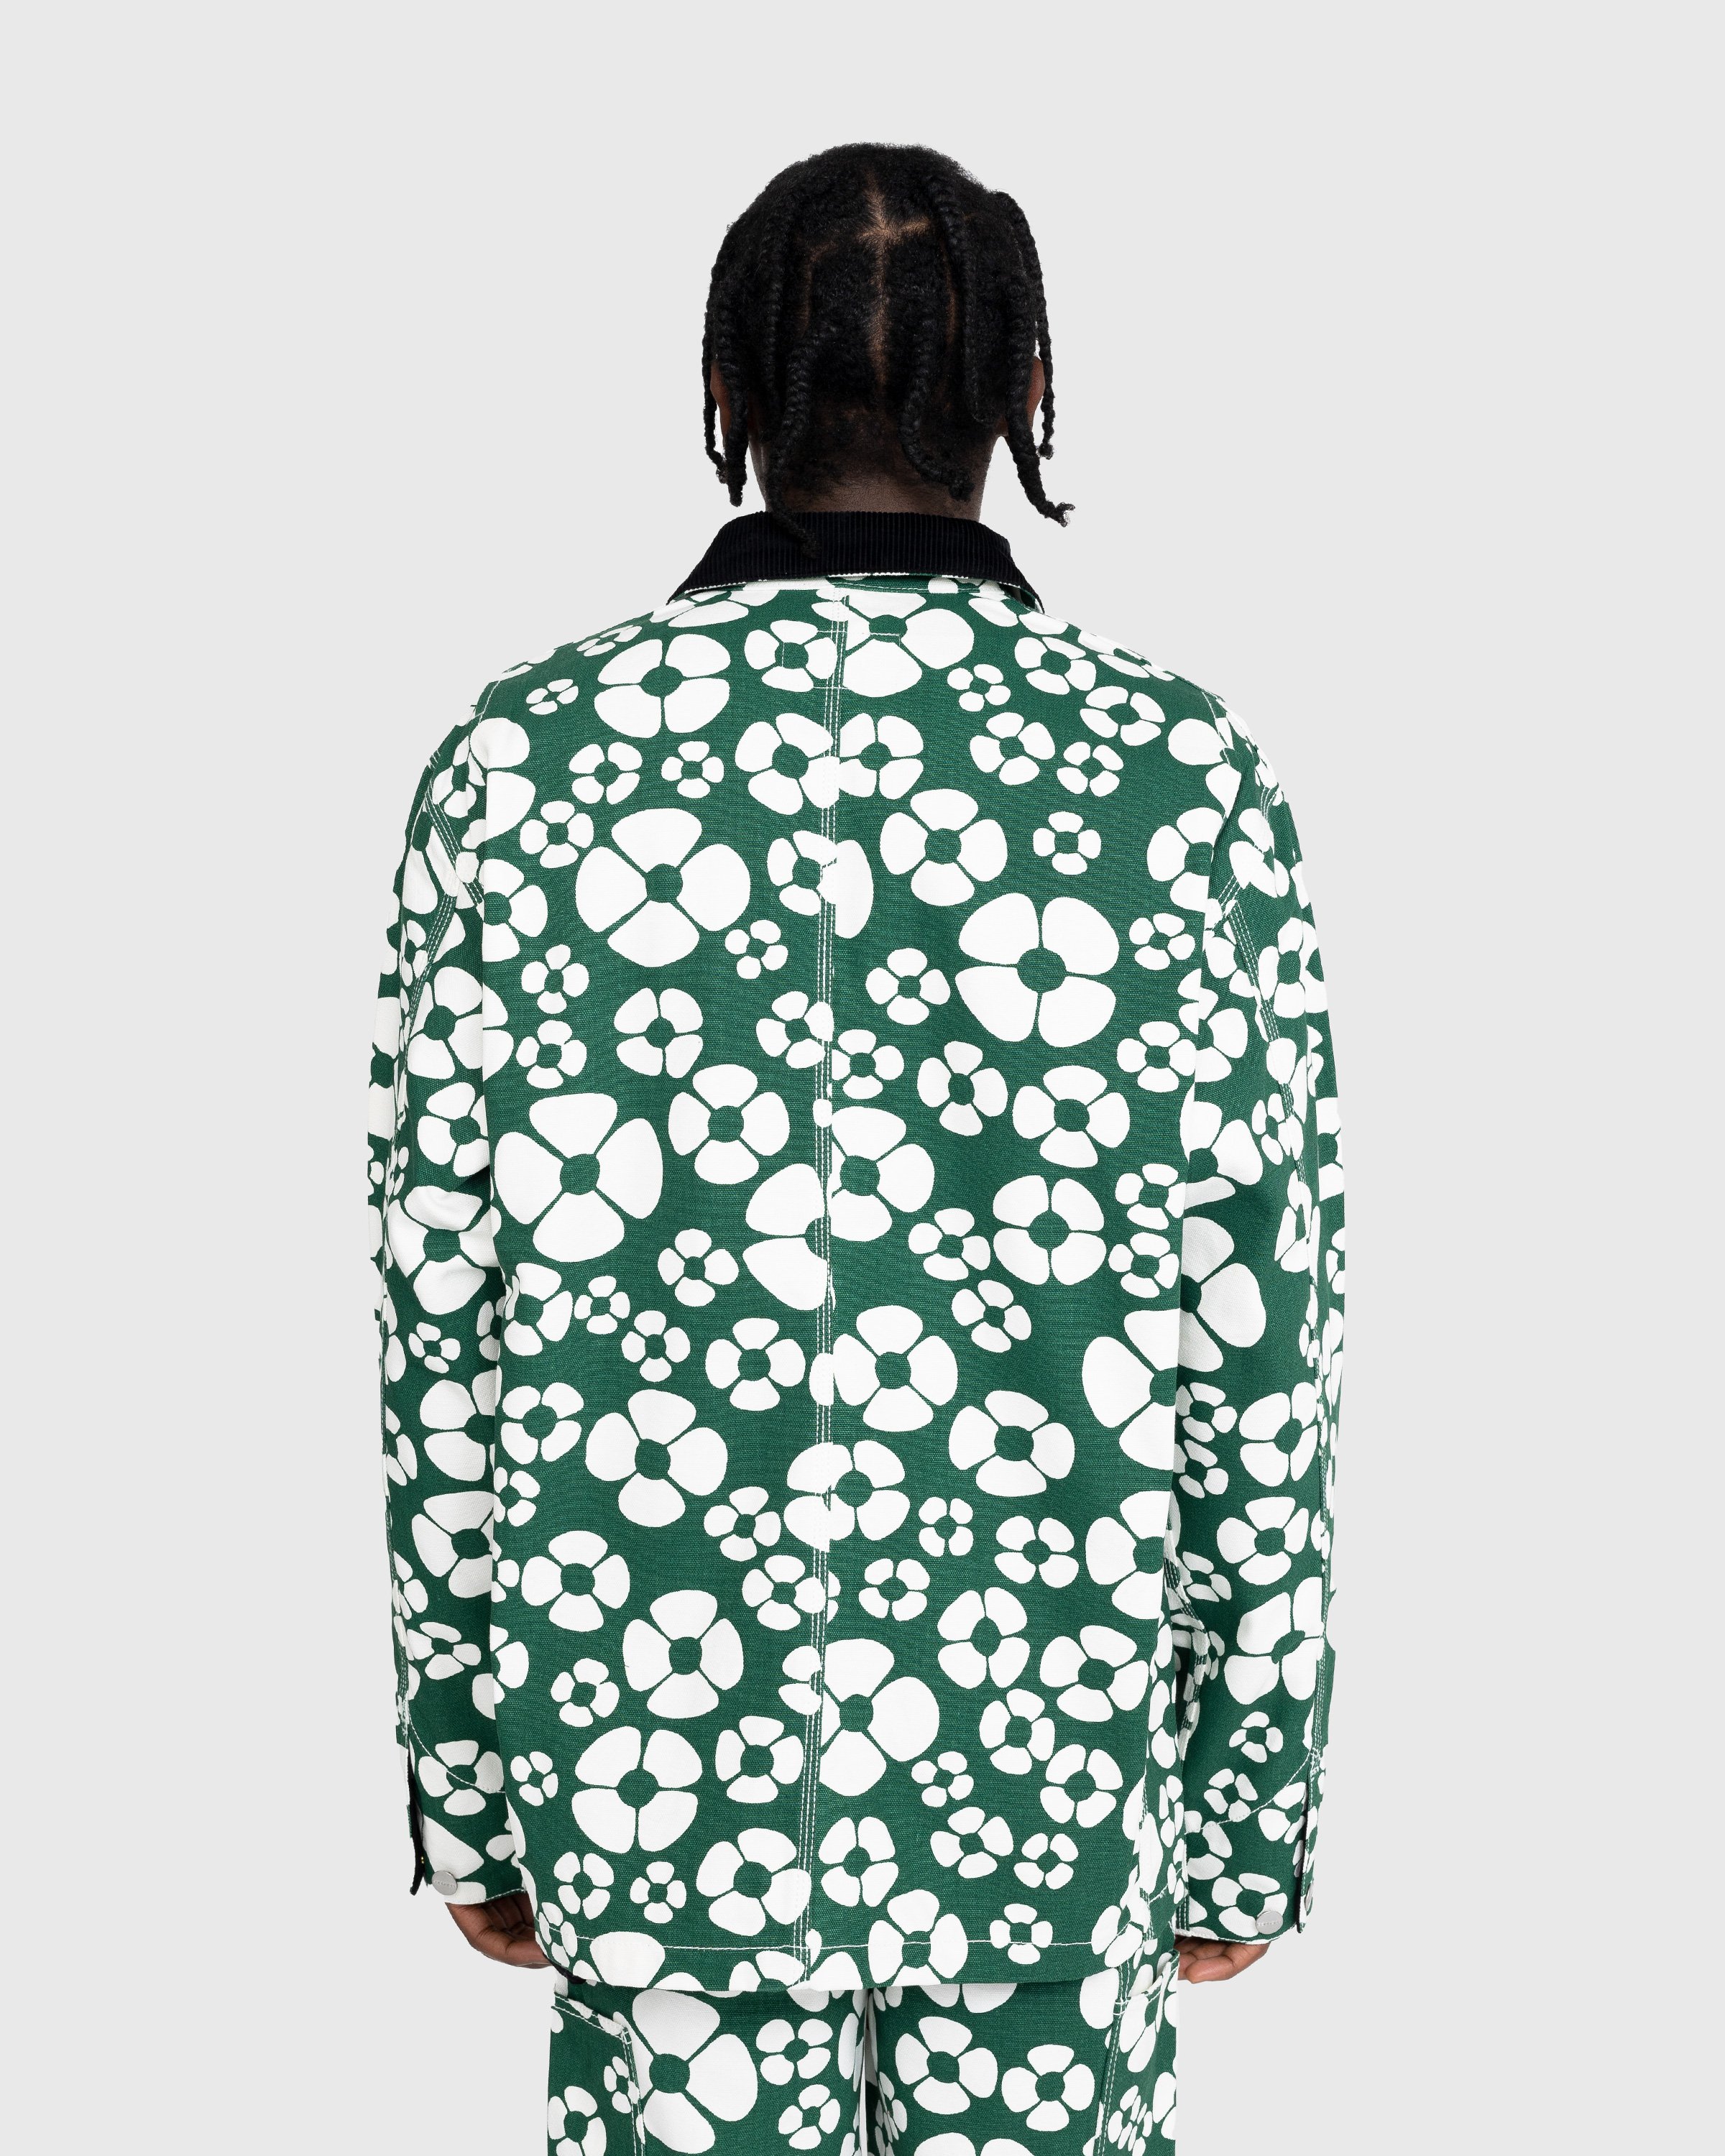 Marni x Carhartt WIP - Floral Jacket Green - Clothing - Green - Image 4